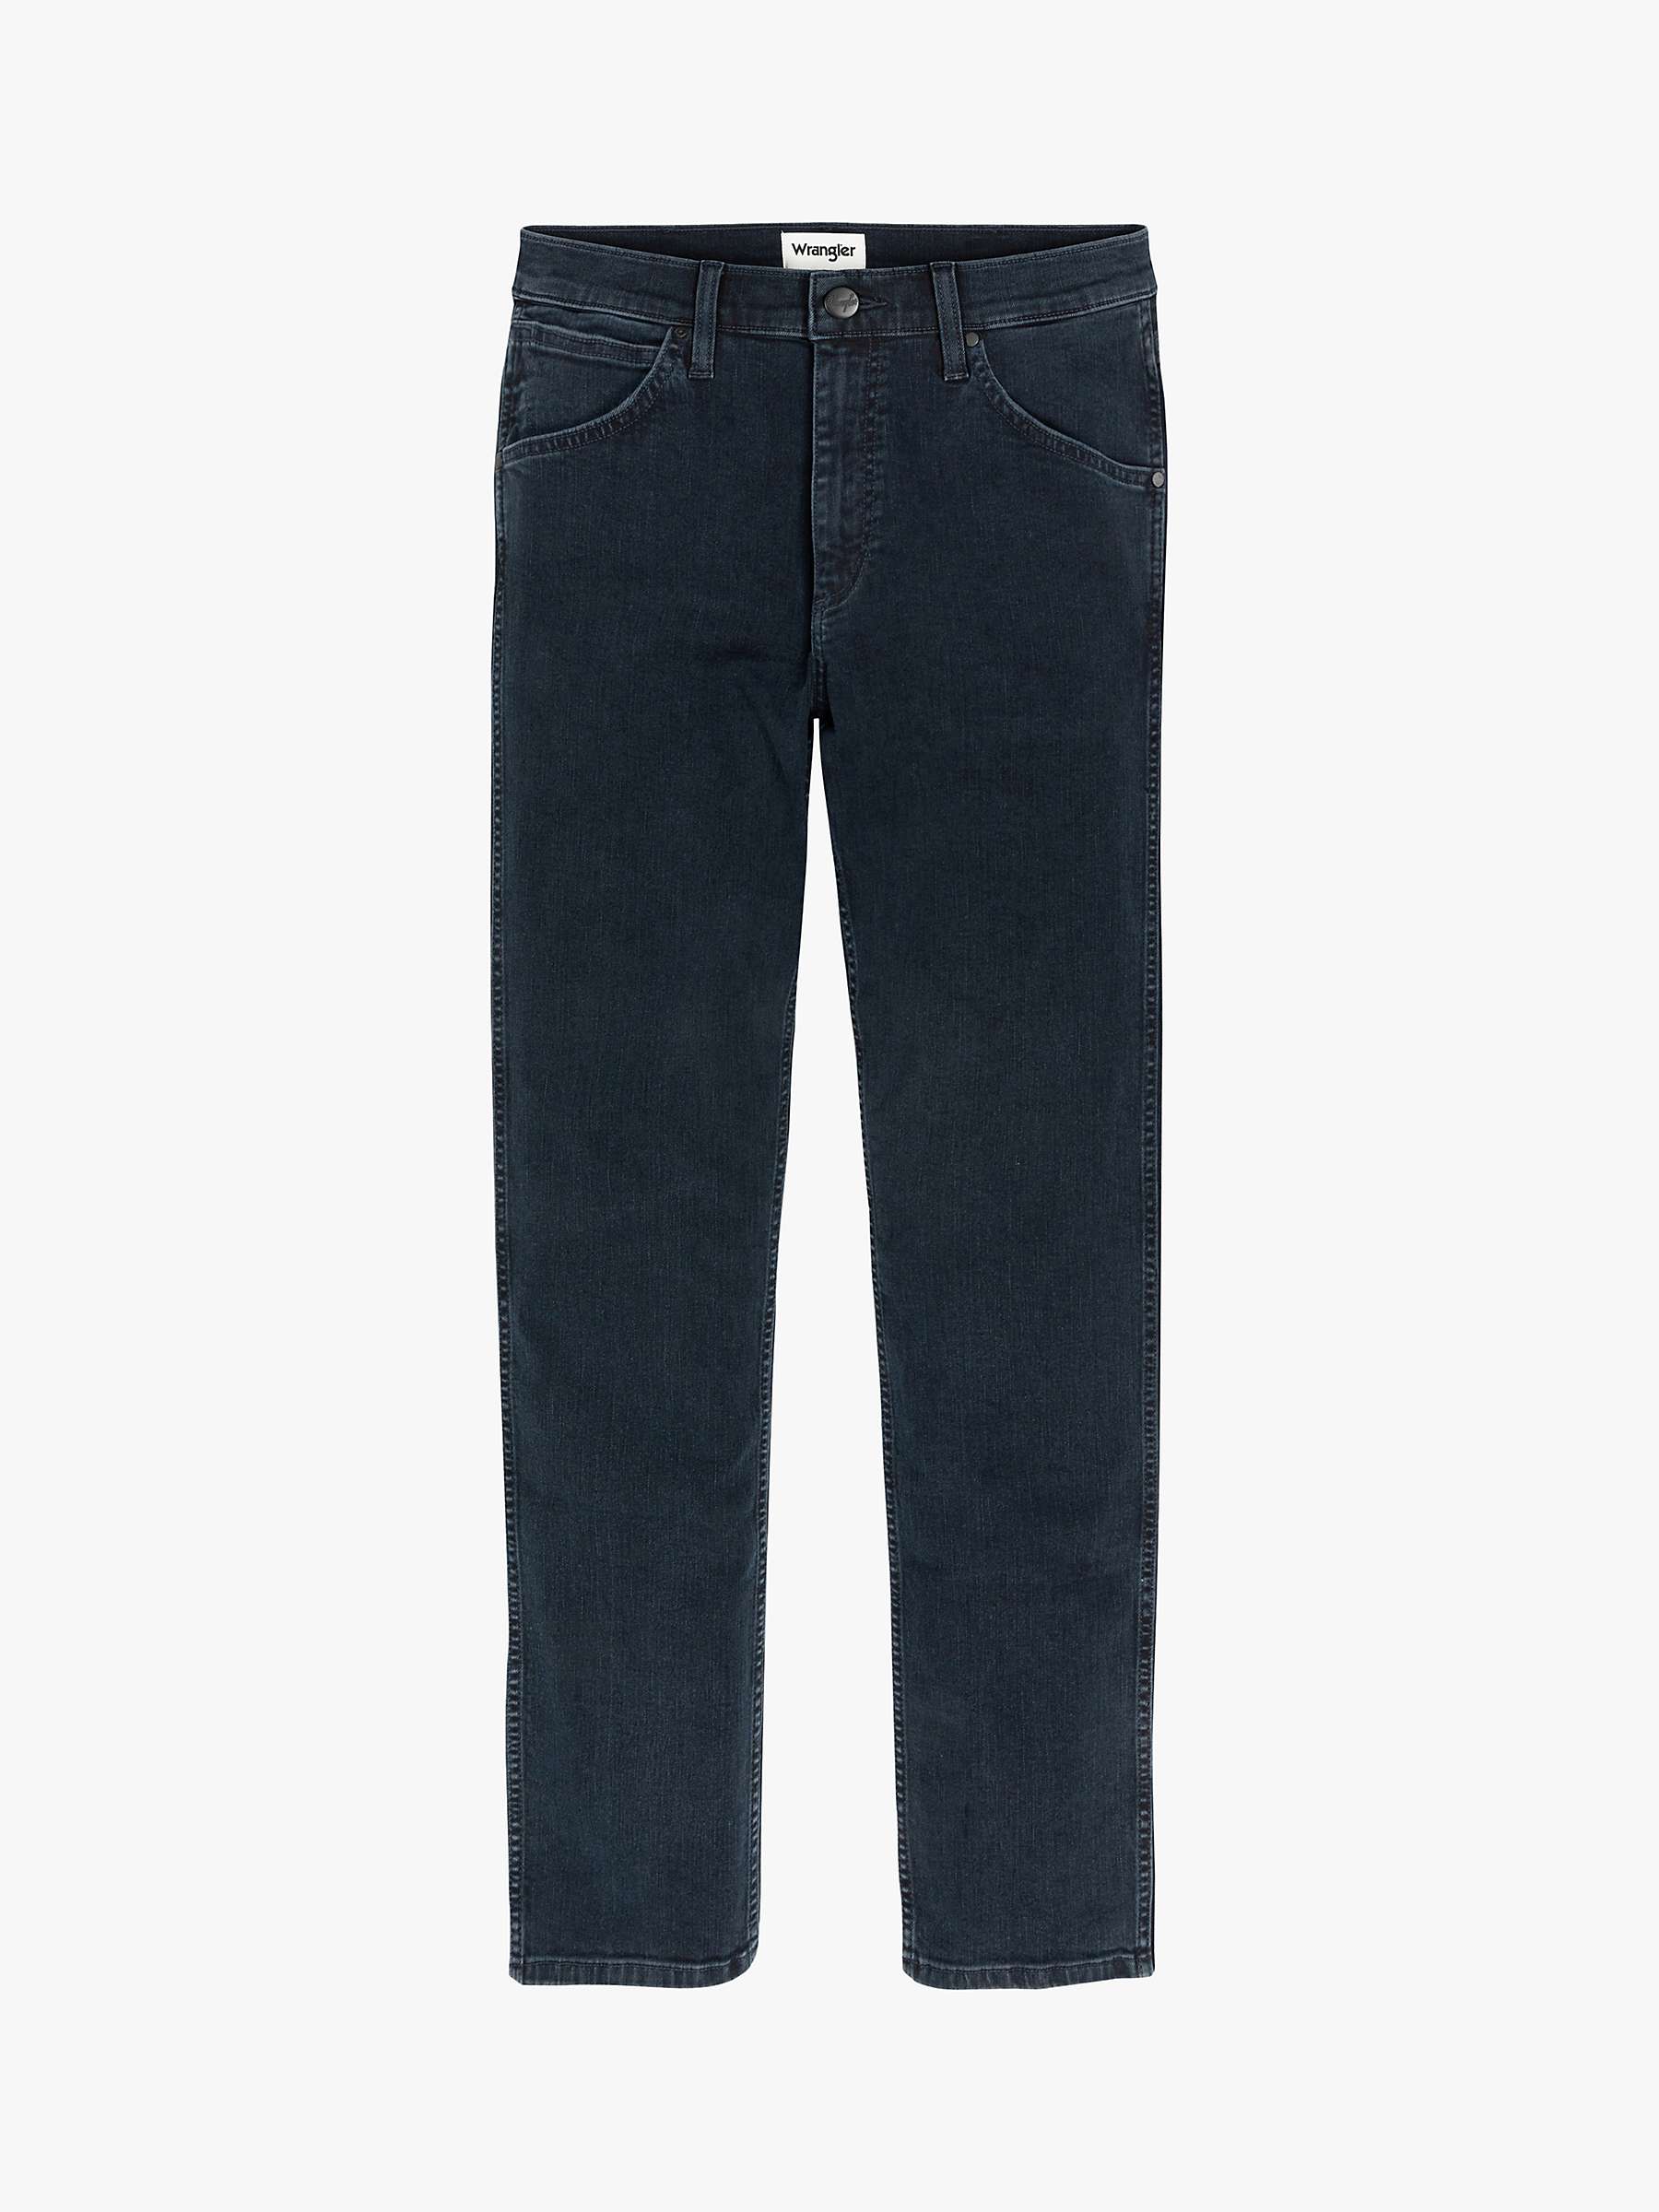 Buy Wrangler Greensboro Slim Fit Denim Jeans, Blue Online at johnlewis.com